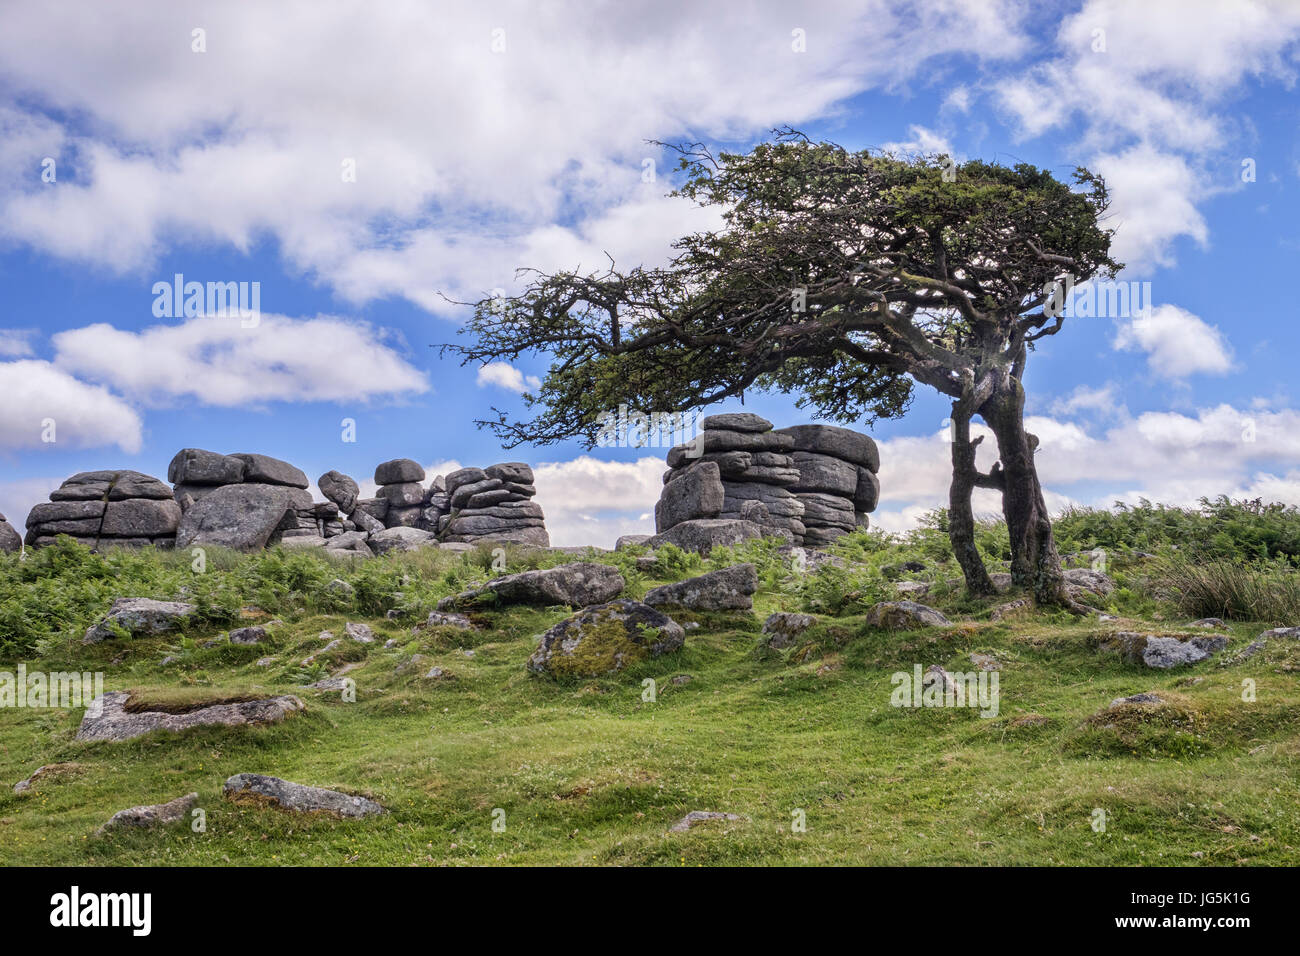 Aubépine Combestone Winswept arbre à Tor, Dartmoor, Devon, UK. Banque D'Images